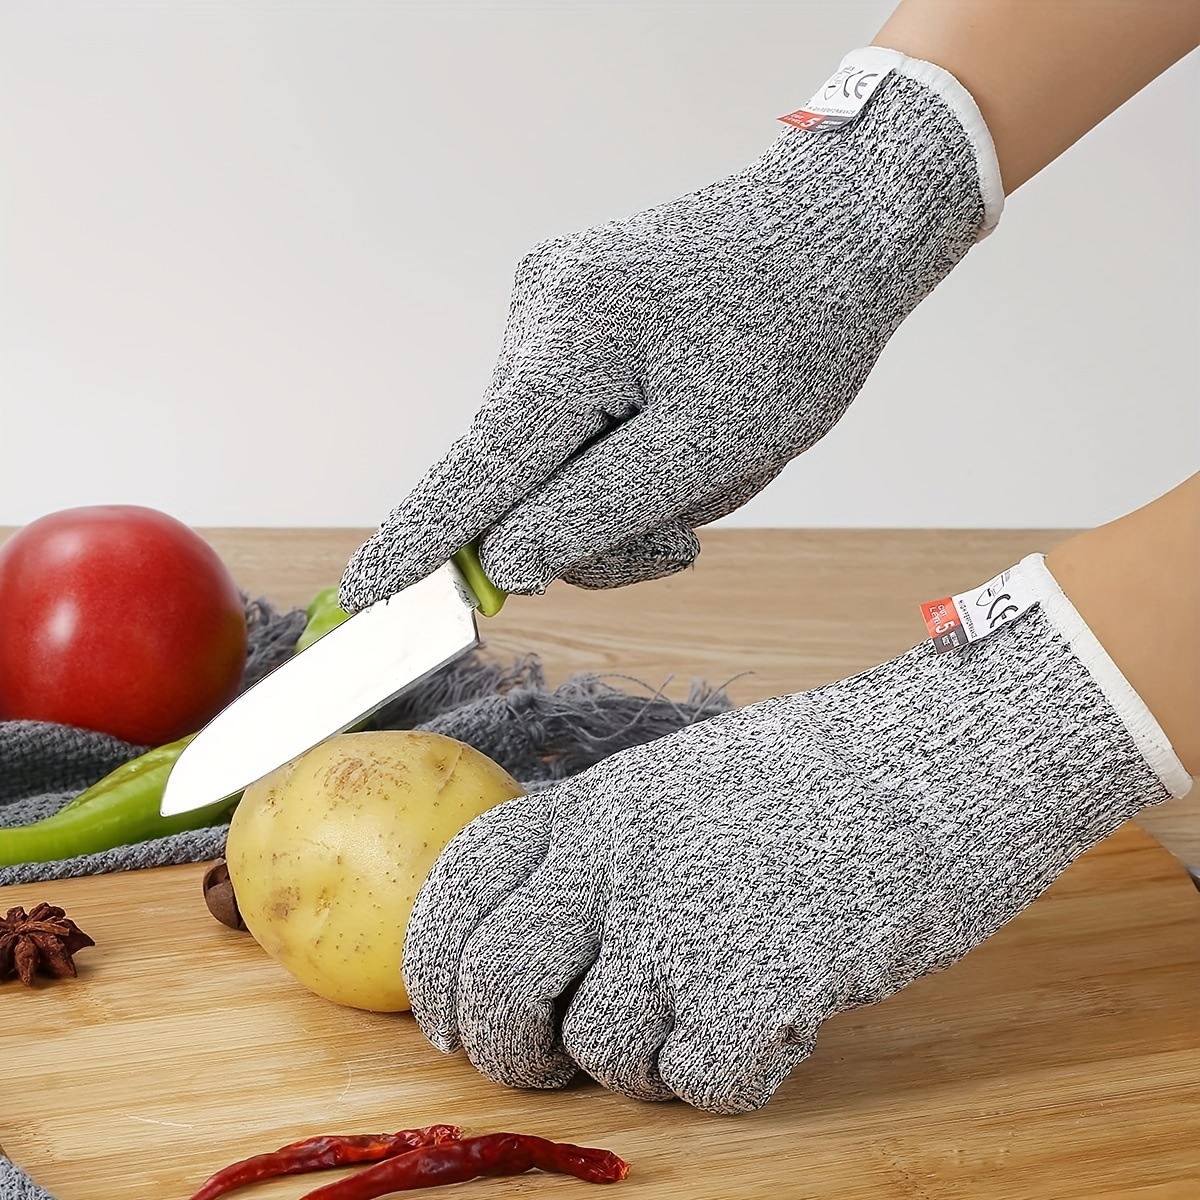 Premium Cut Resistant Glove Food Grade Level 5 Protection - Temu